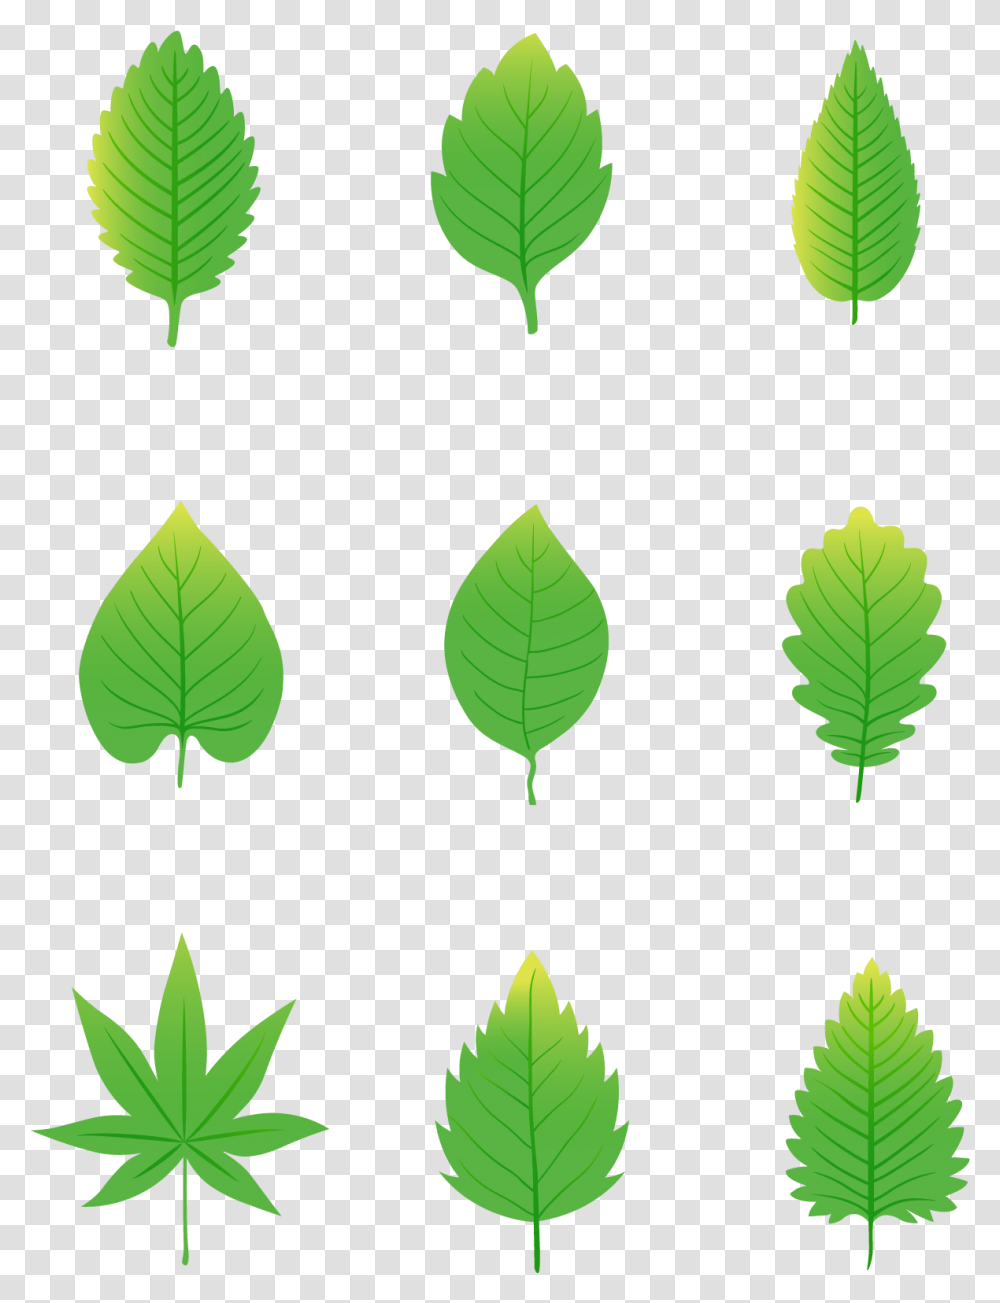 Simplicity Cartoon Green Leaves Elements And Vector Clip Art, Leaf, Plant, Vegetation, Tree Transparent Png